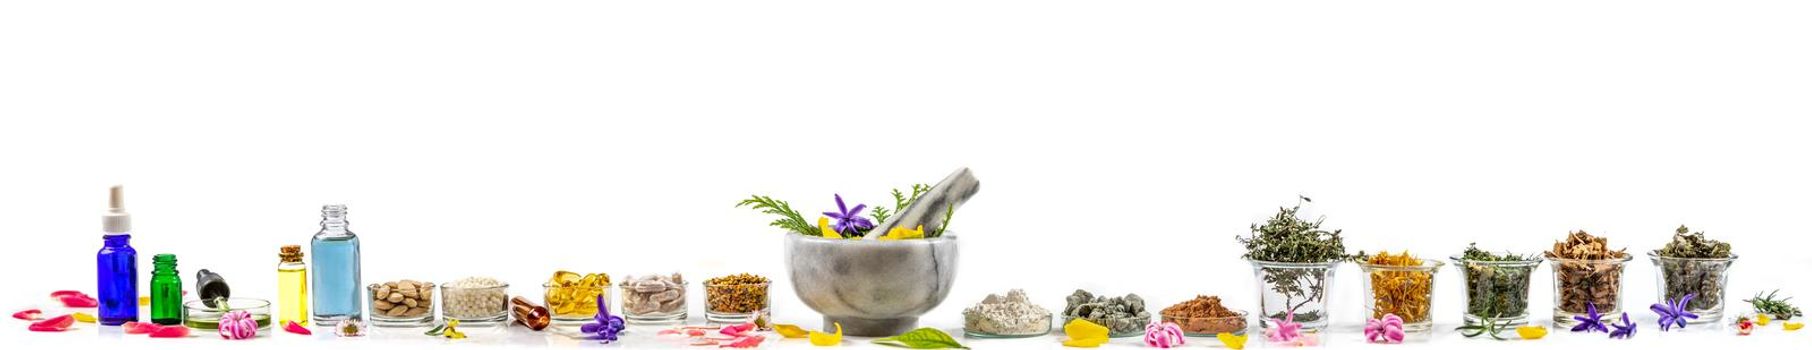 Essential oils, food supplements, clay medicinal plants